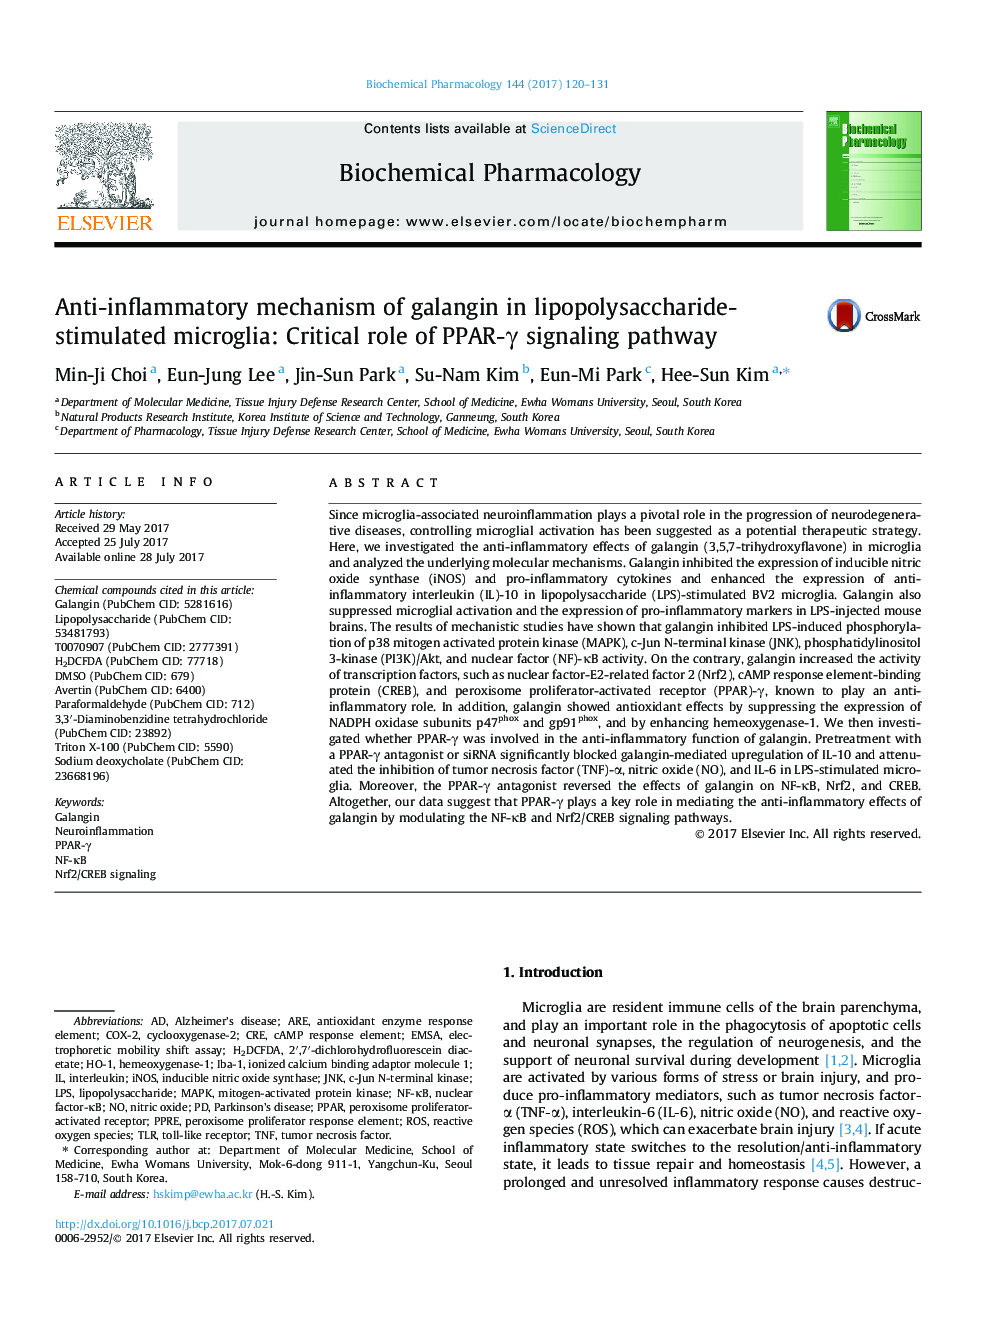 Anti-inflammatory mechanism of galangin in lipopolysaccharide-stimulated microglia: Critical role of PPAR-Î³ signaling pathway